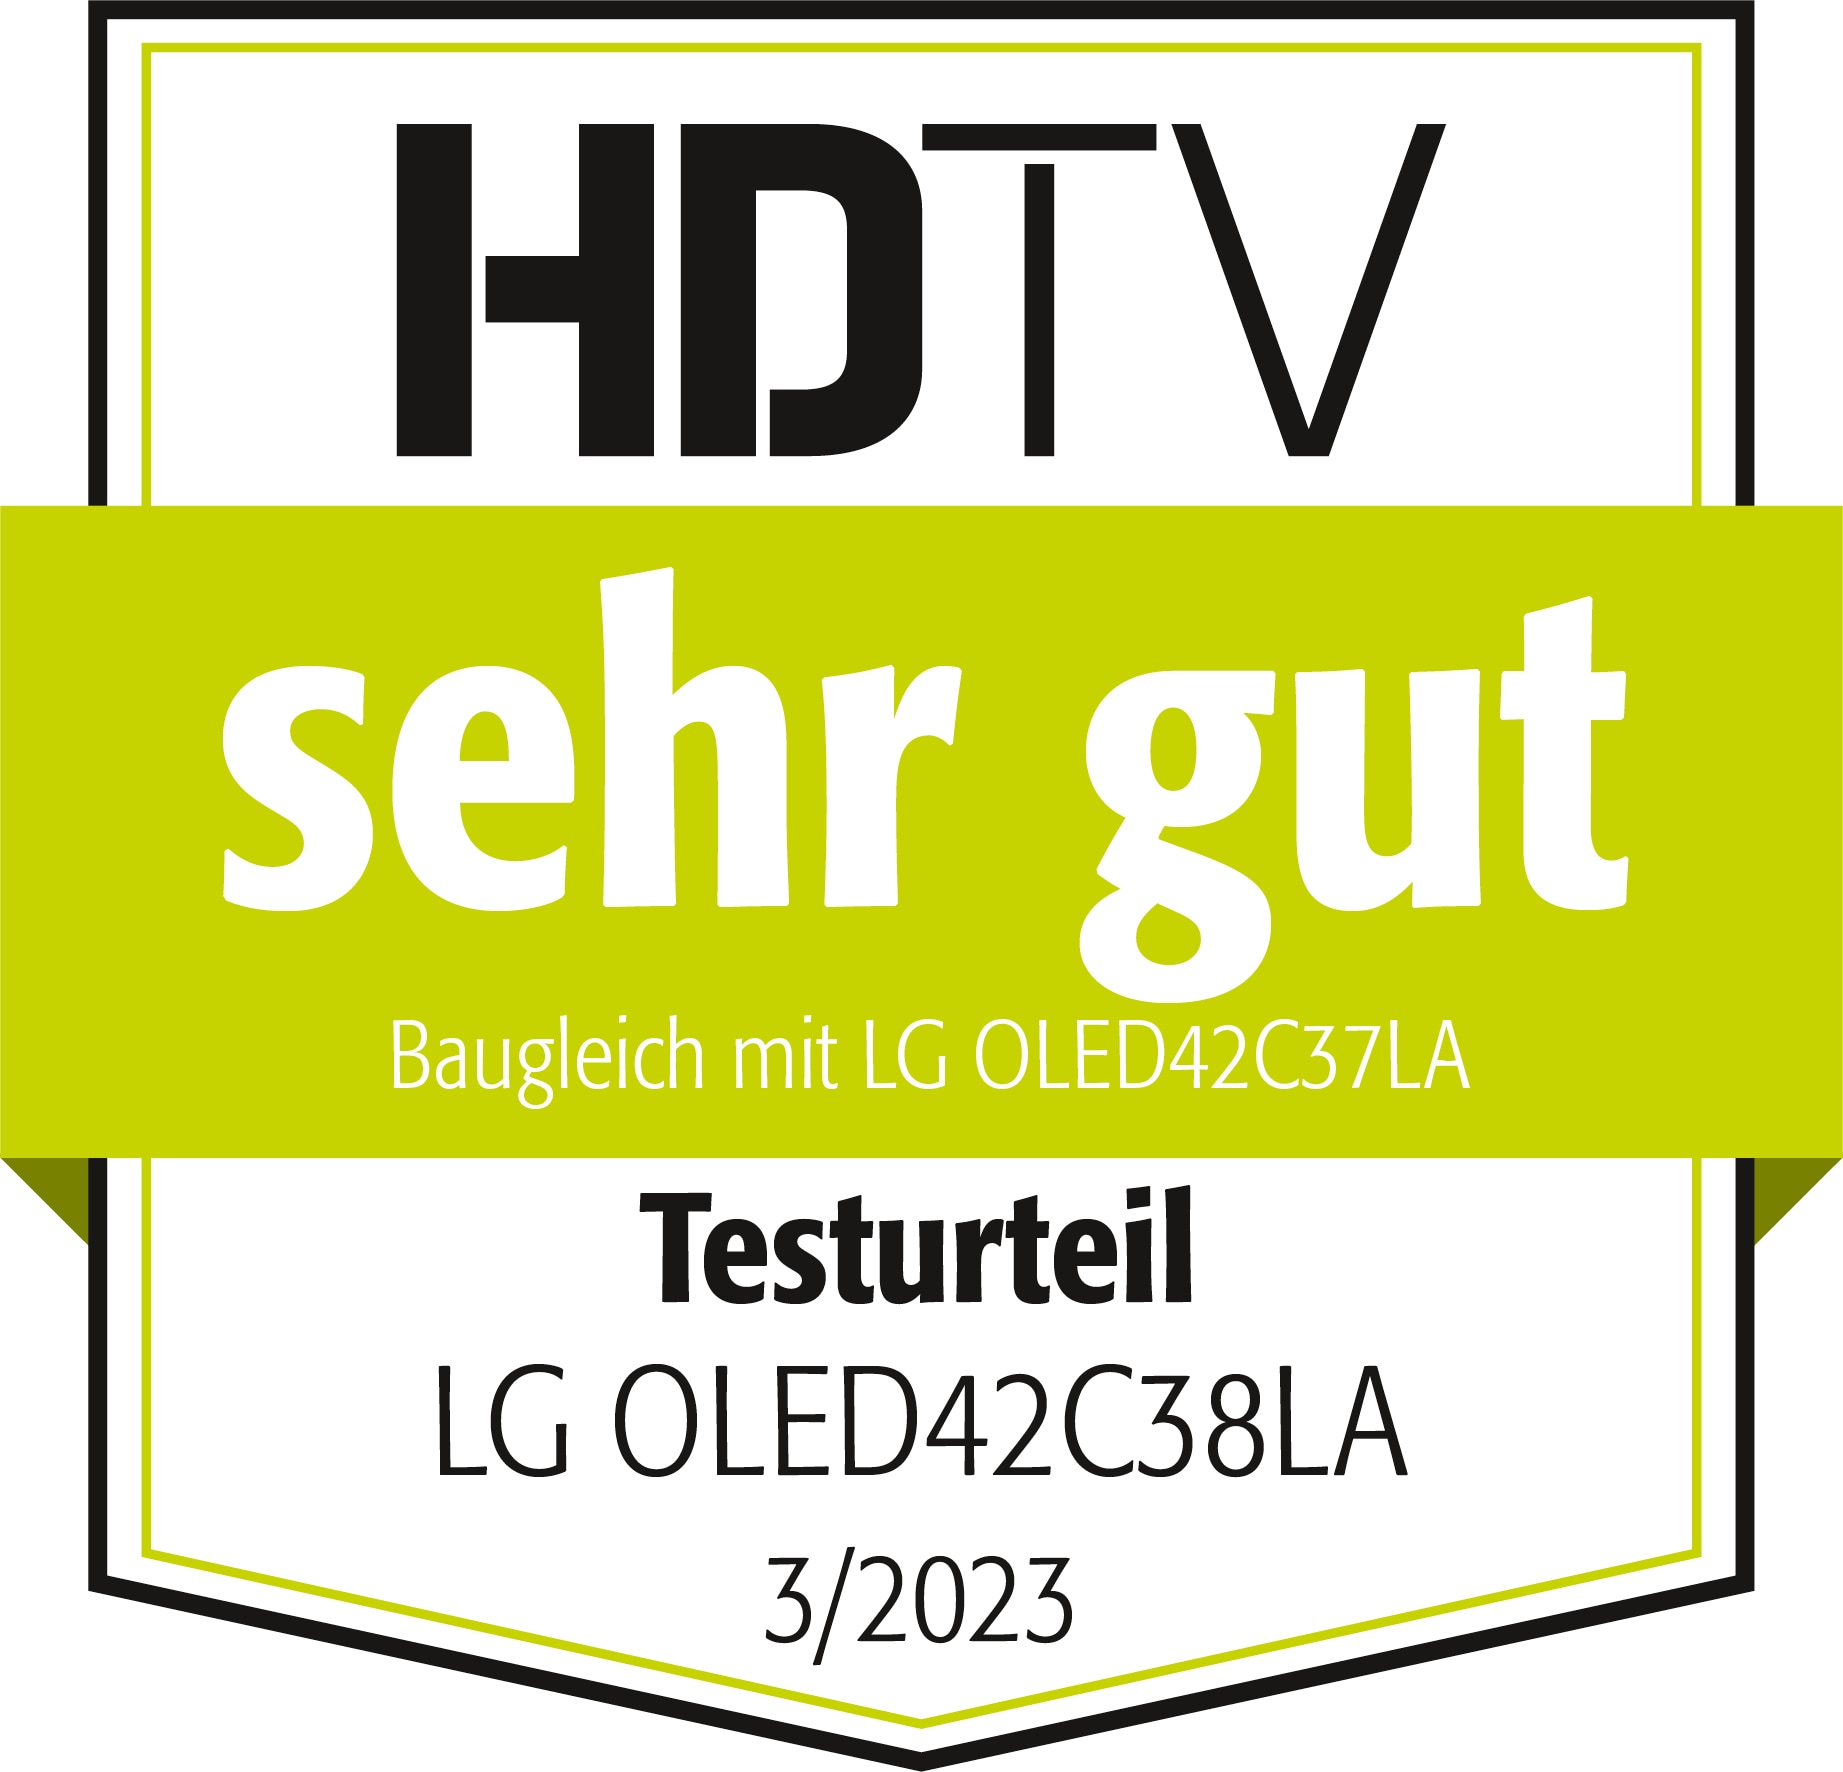 HDTV OLED42C38LA